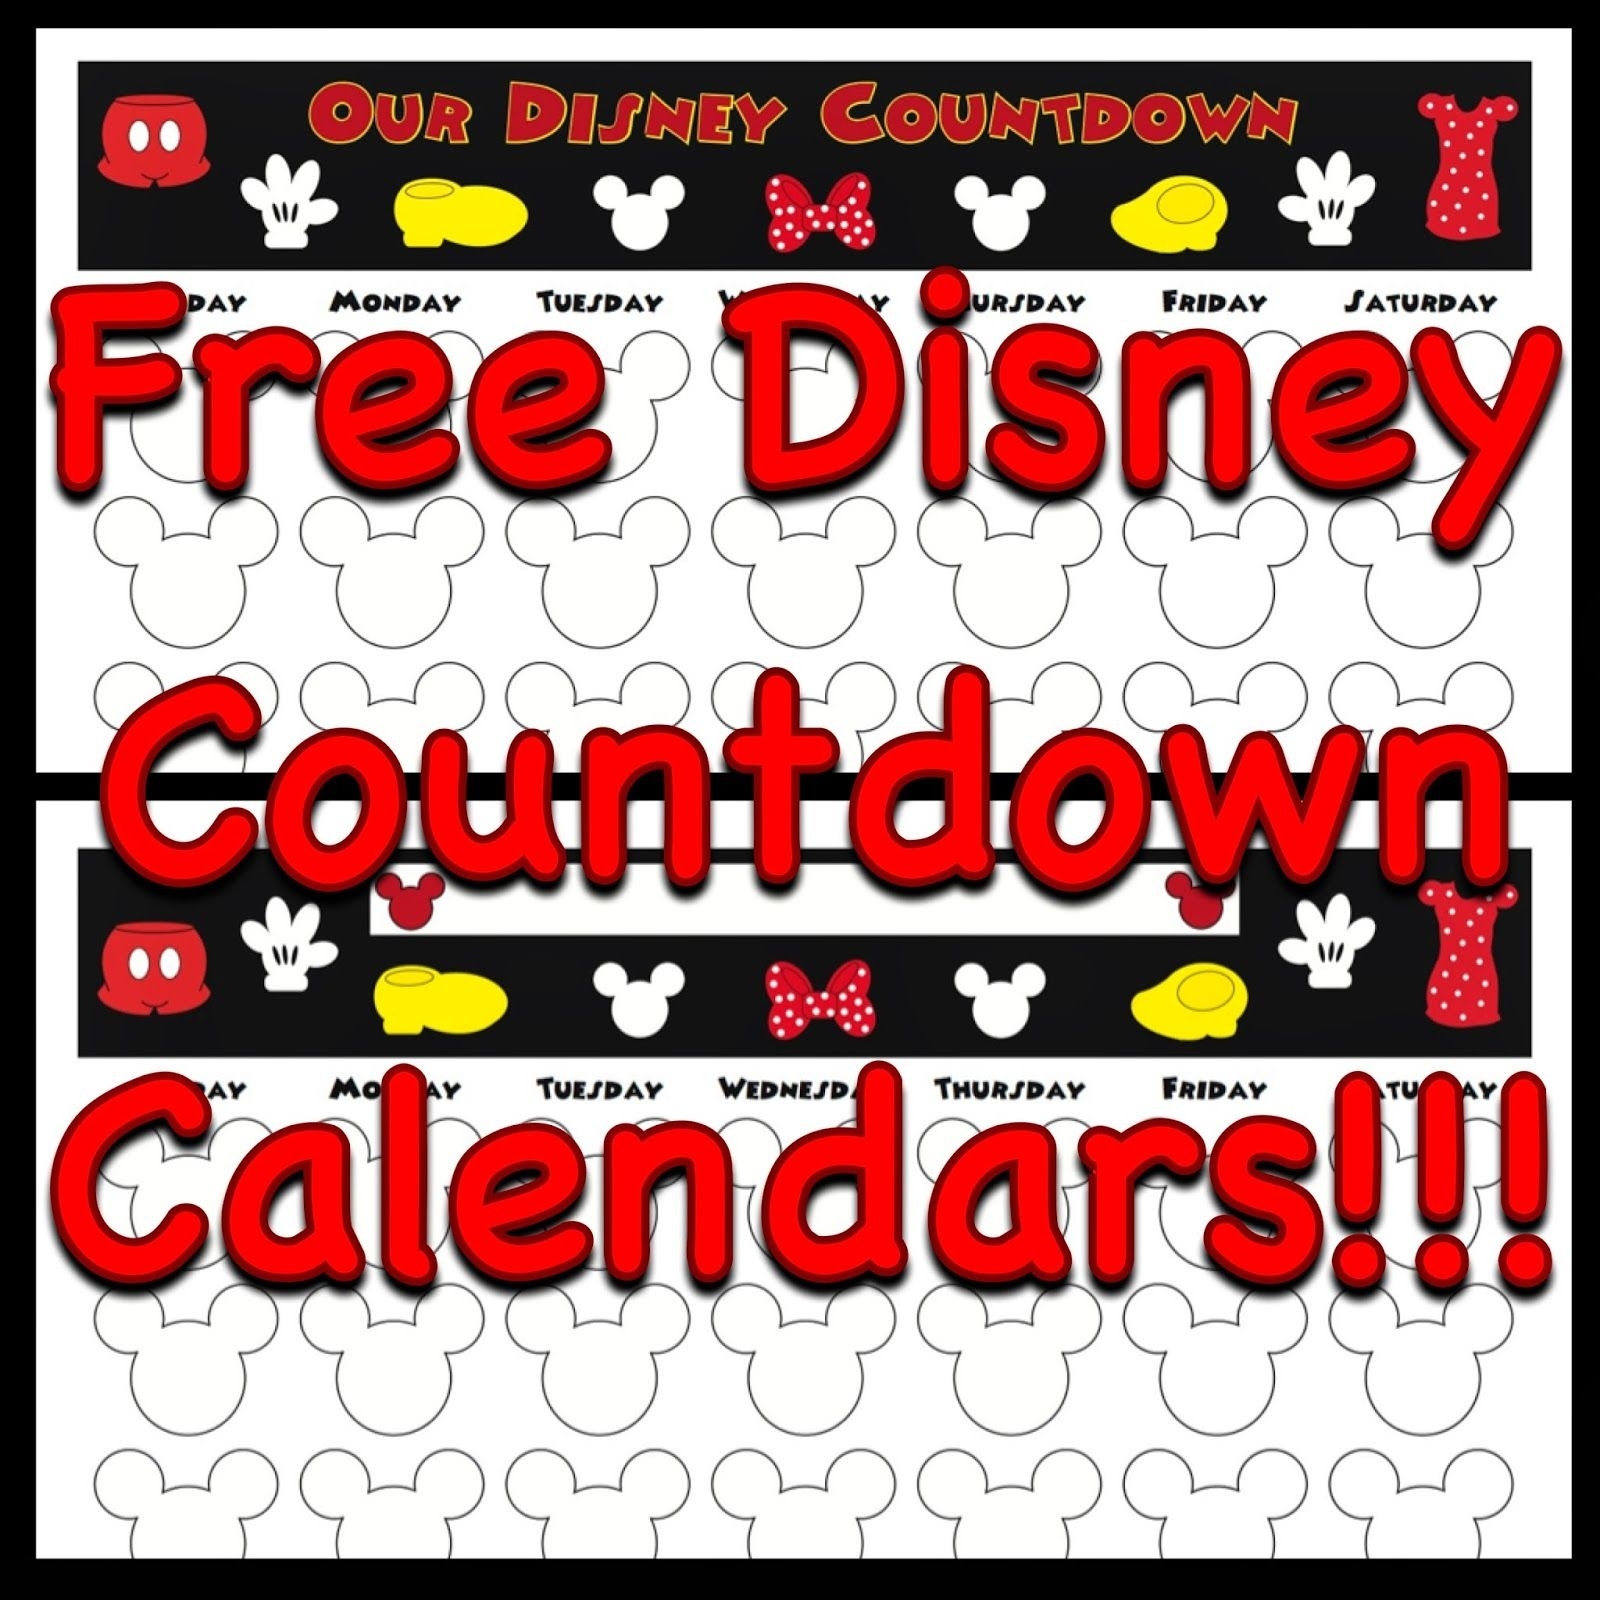 Free, Printable Countdown Calendars To Use For Your Next Disney Trip Countdown Calendar Template Printable